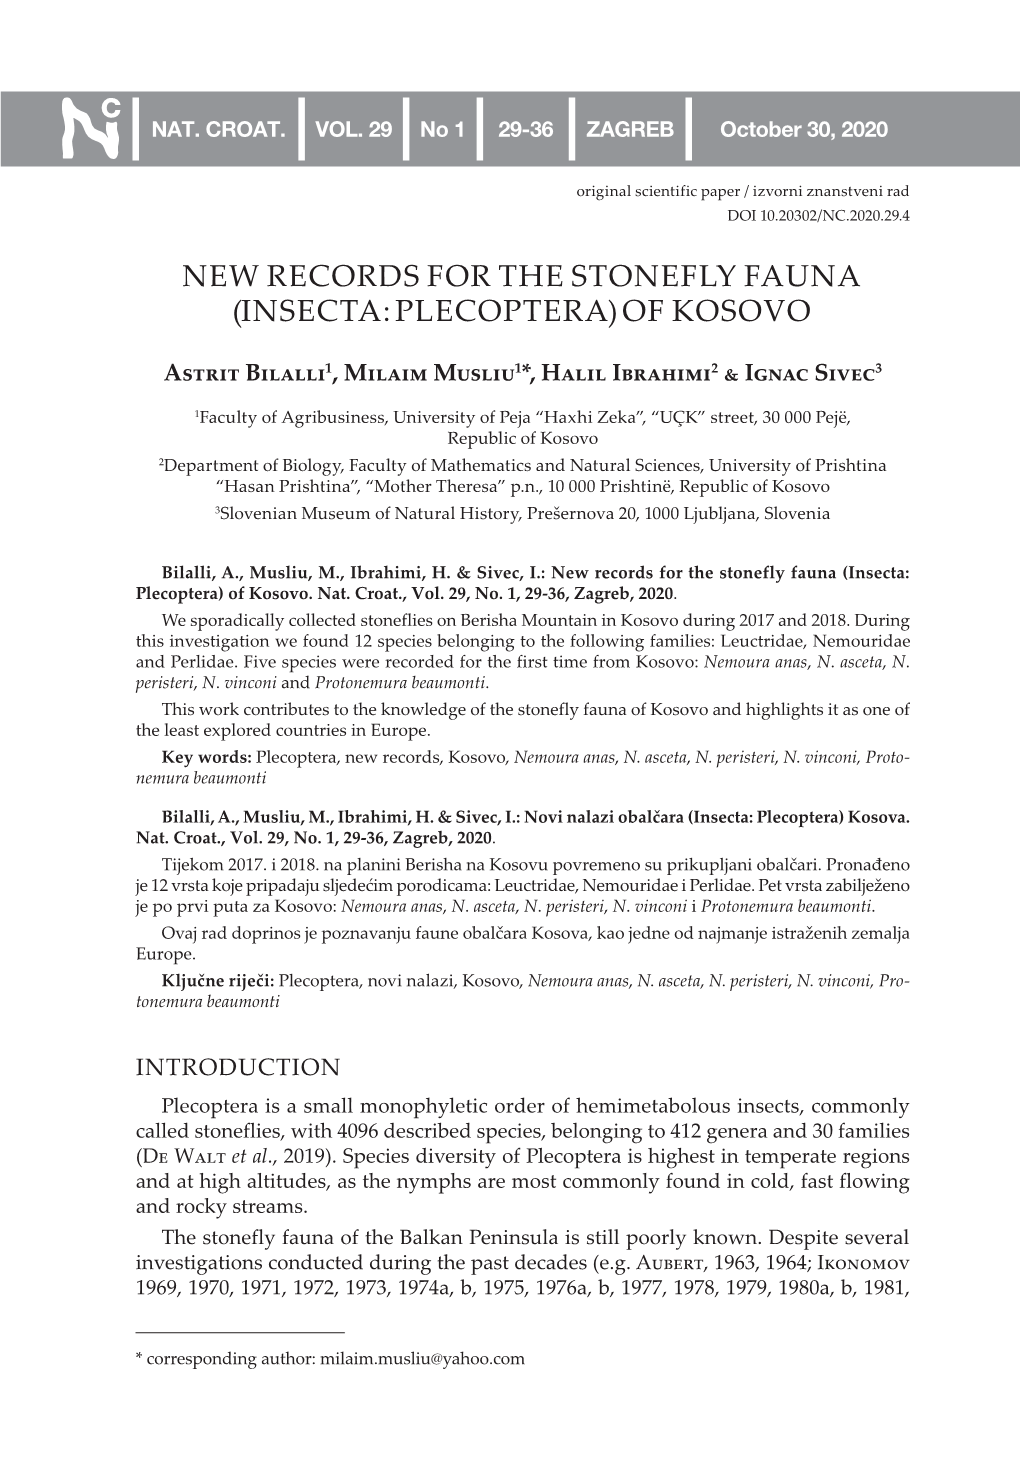 New Records for the Stonefly Fauna (Insecta: Plecoptera) of Kosovo